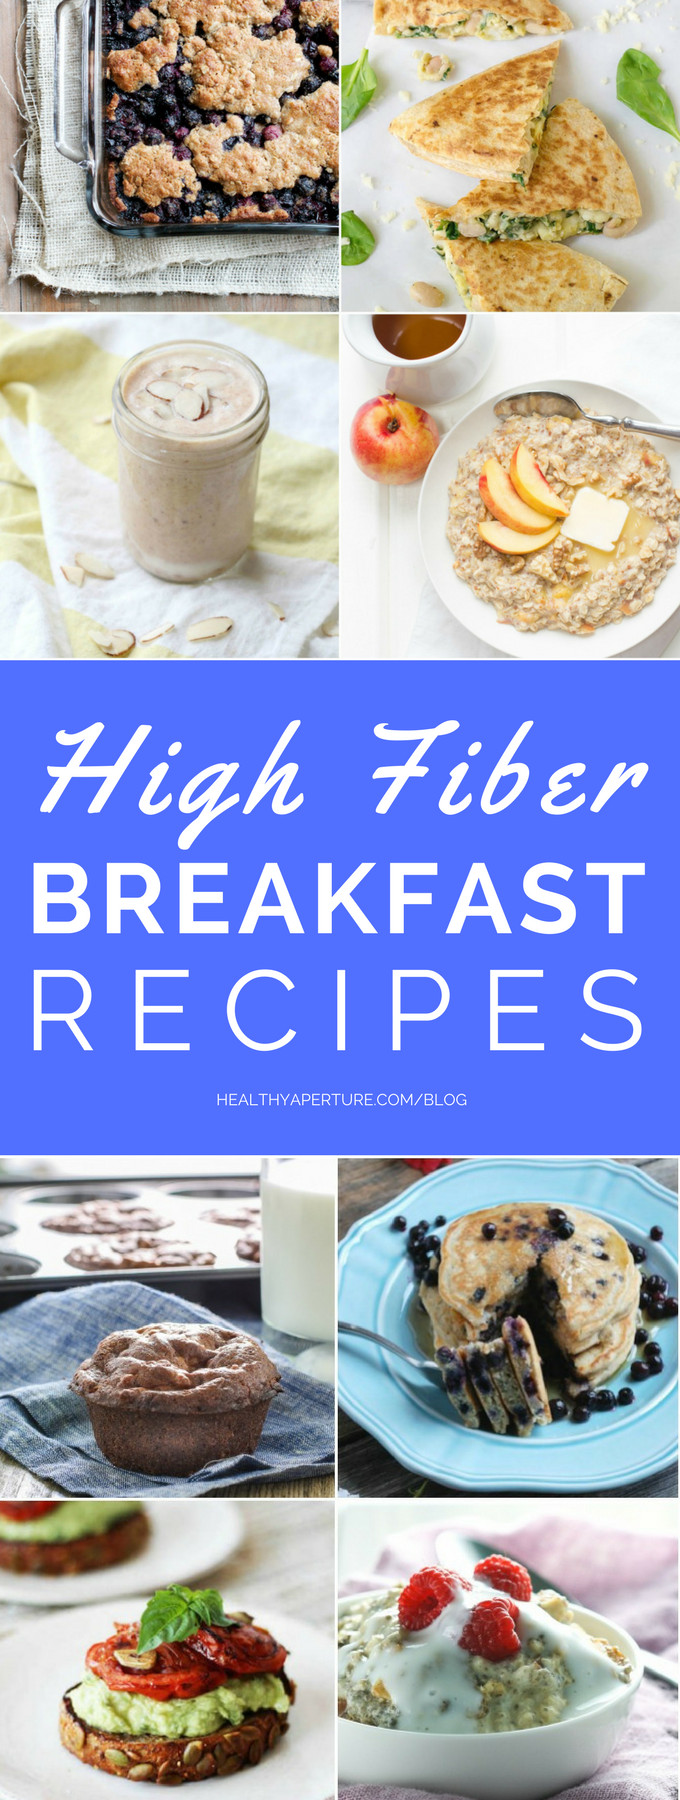 High Fiber Breakfast Recipes
 High Fiber Breakfast Recipes Breakfast